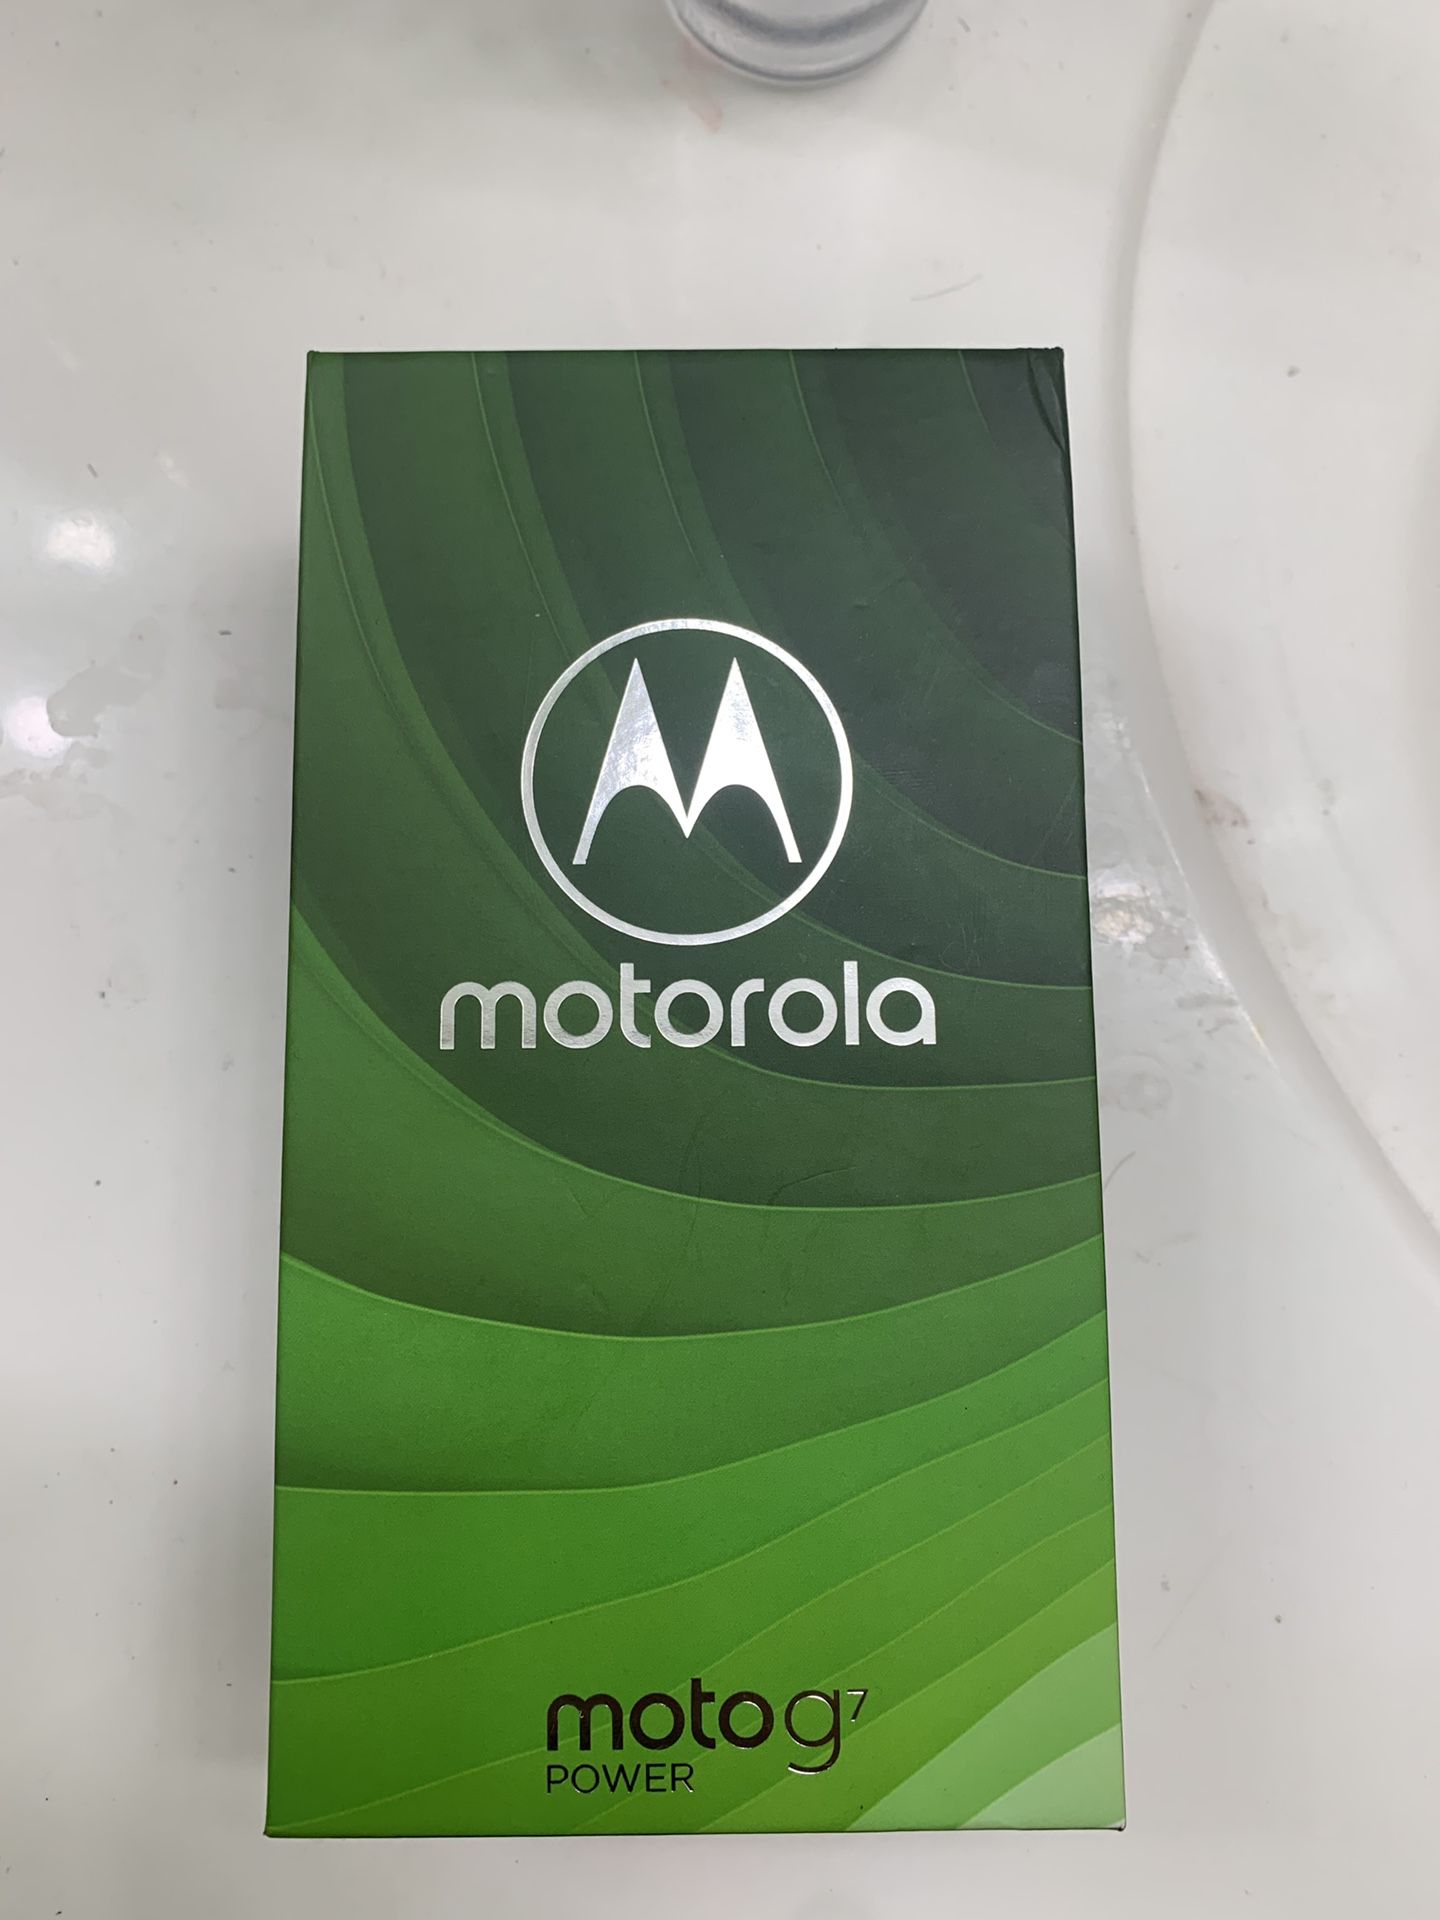 Motorola g7 power version